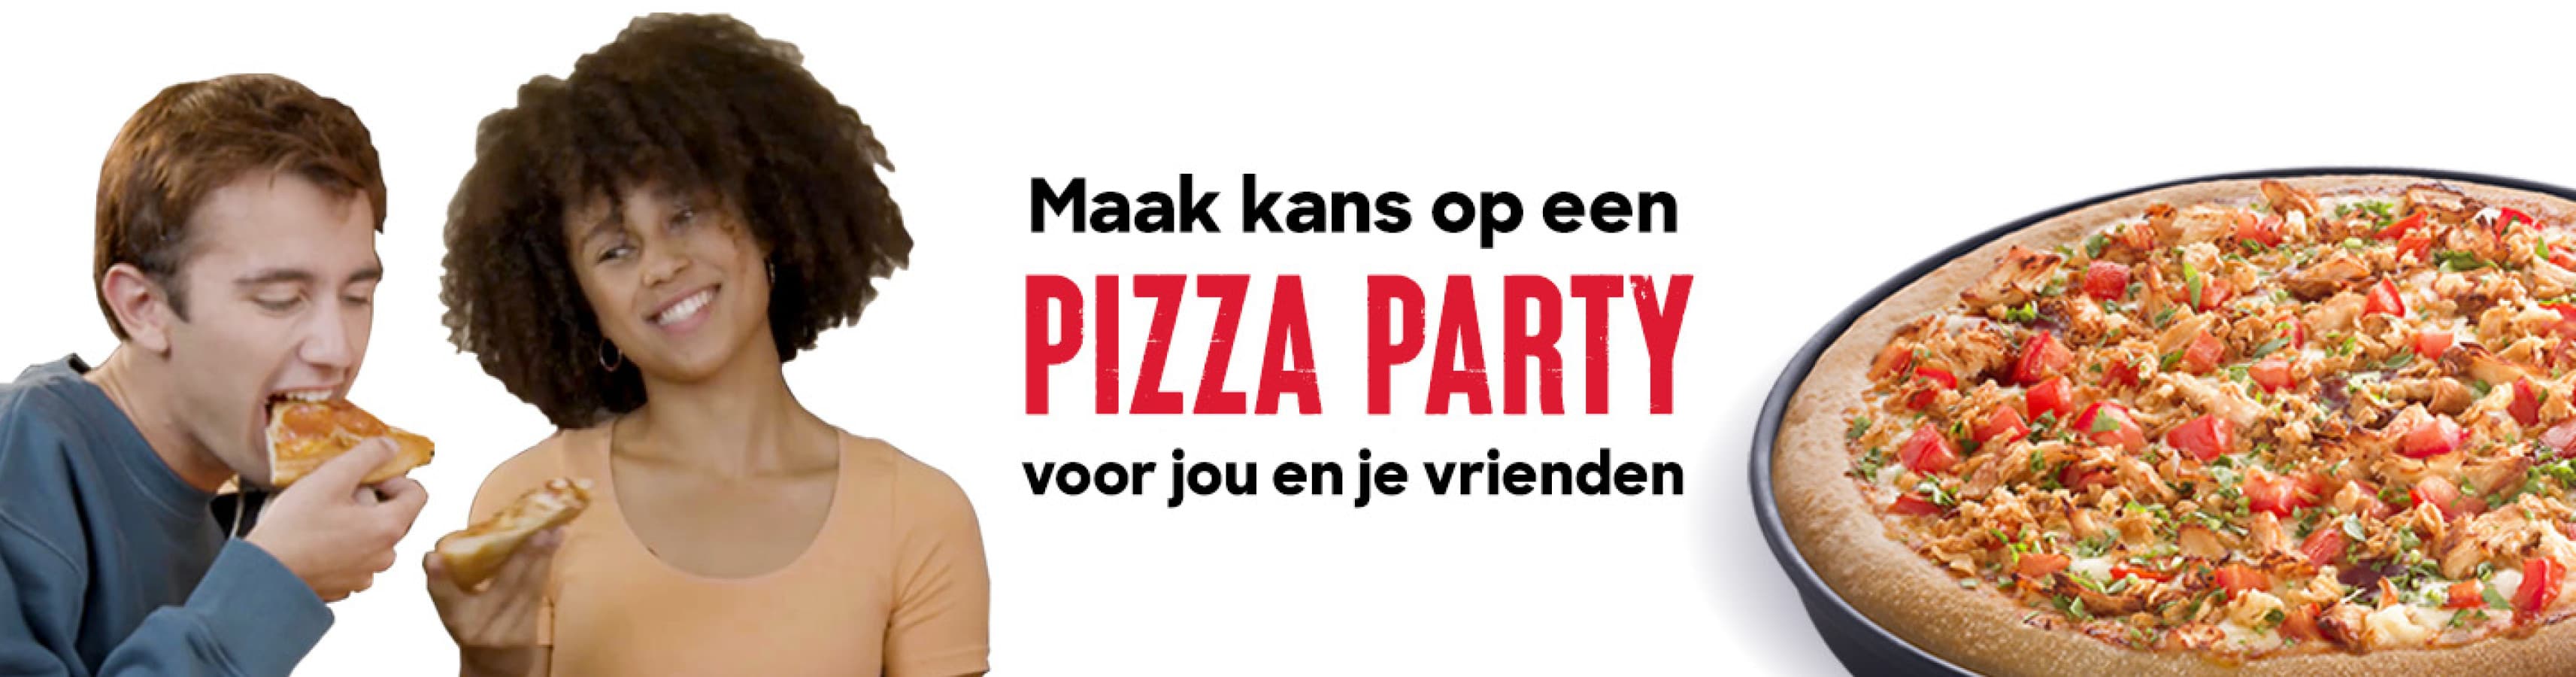 Win jouw pizza party bij Pizza Hut